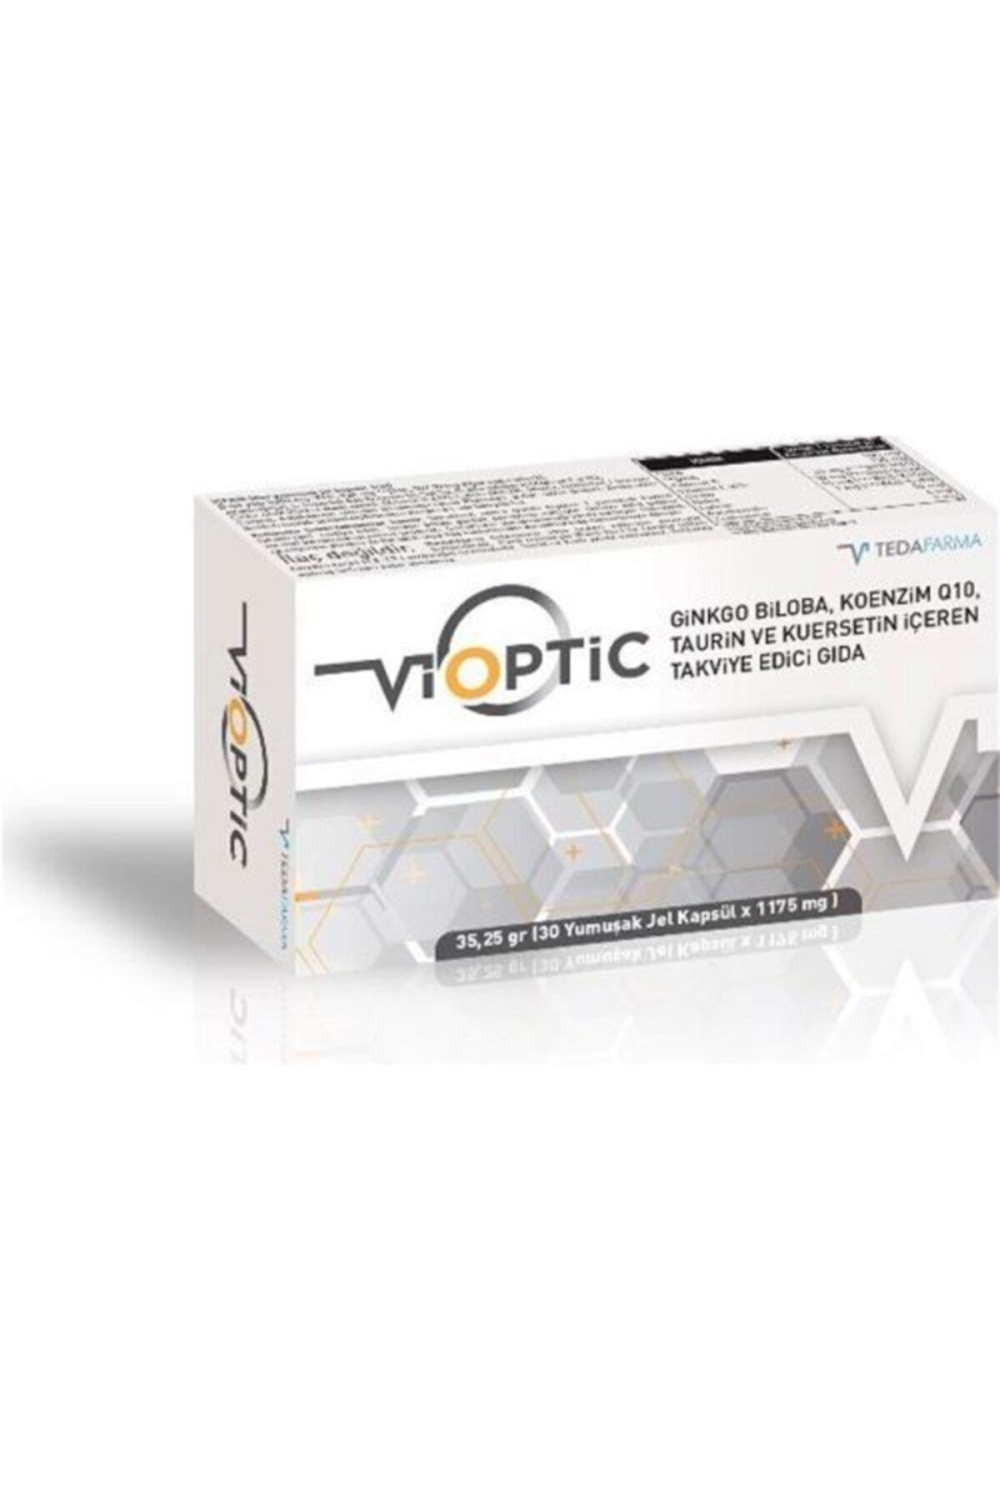 Vioptic 30 Soft Jel Kapsül - 1